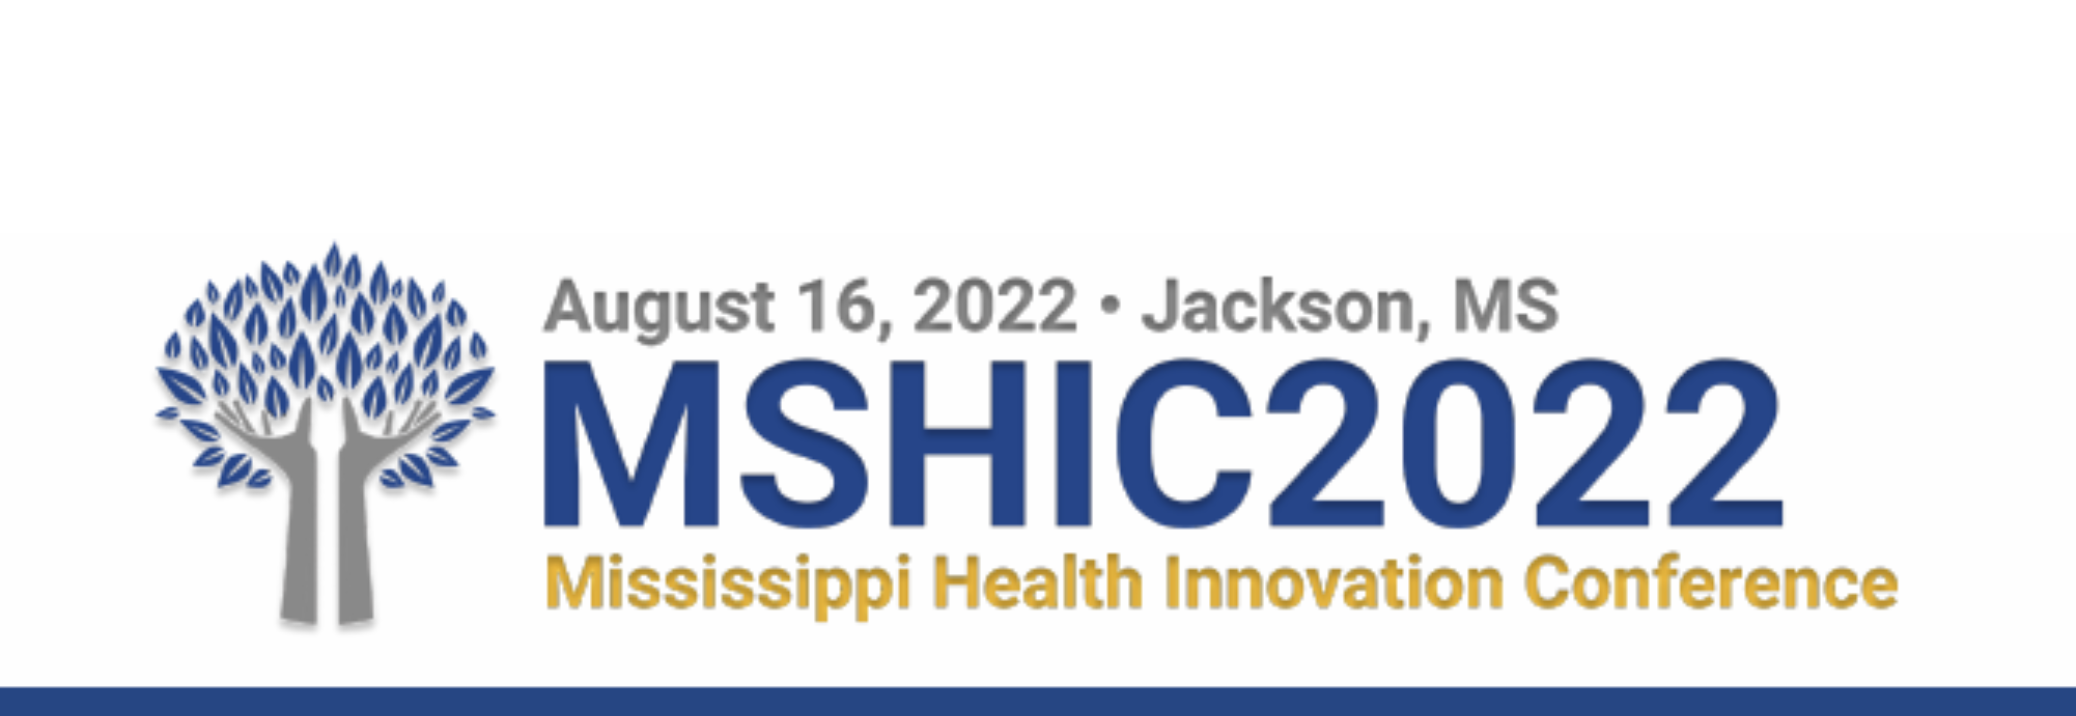 Mississippi Health Innovation Conference logo